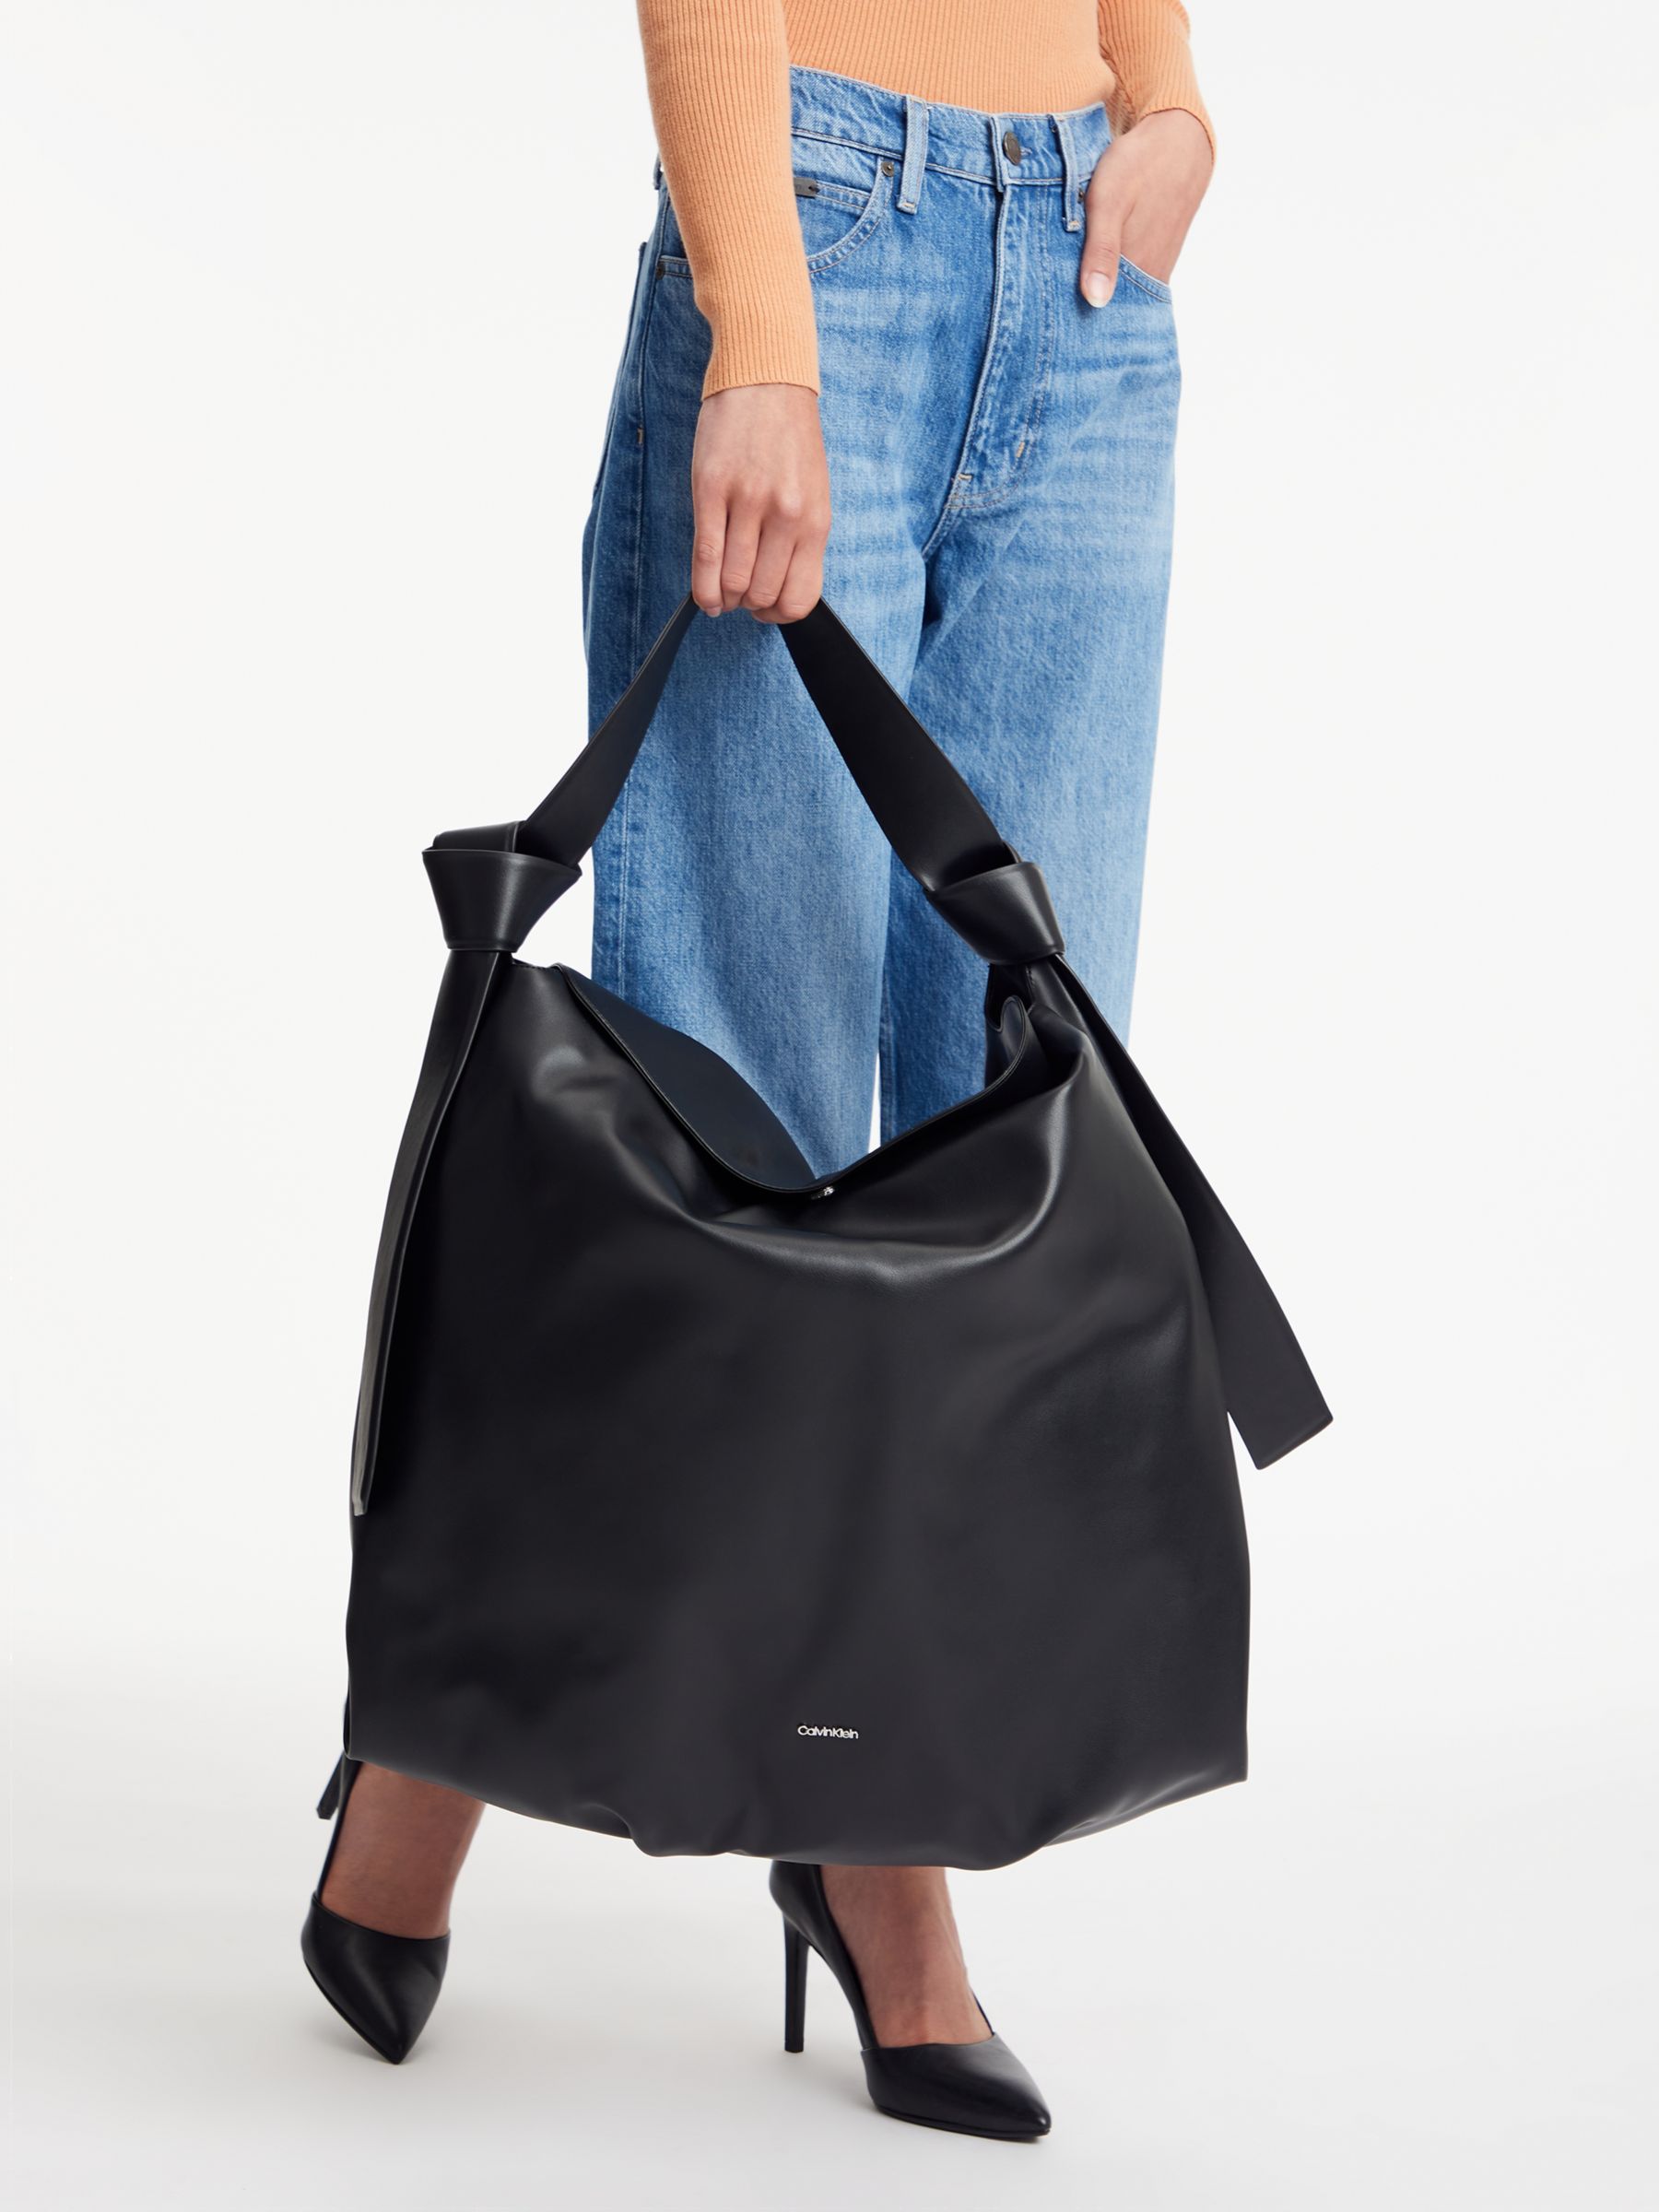 Calvin Klein Tie Knot Detail Tote Bag, Black